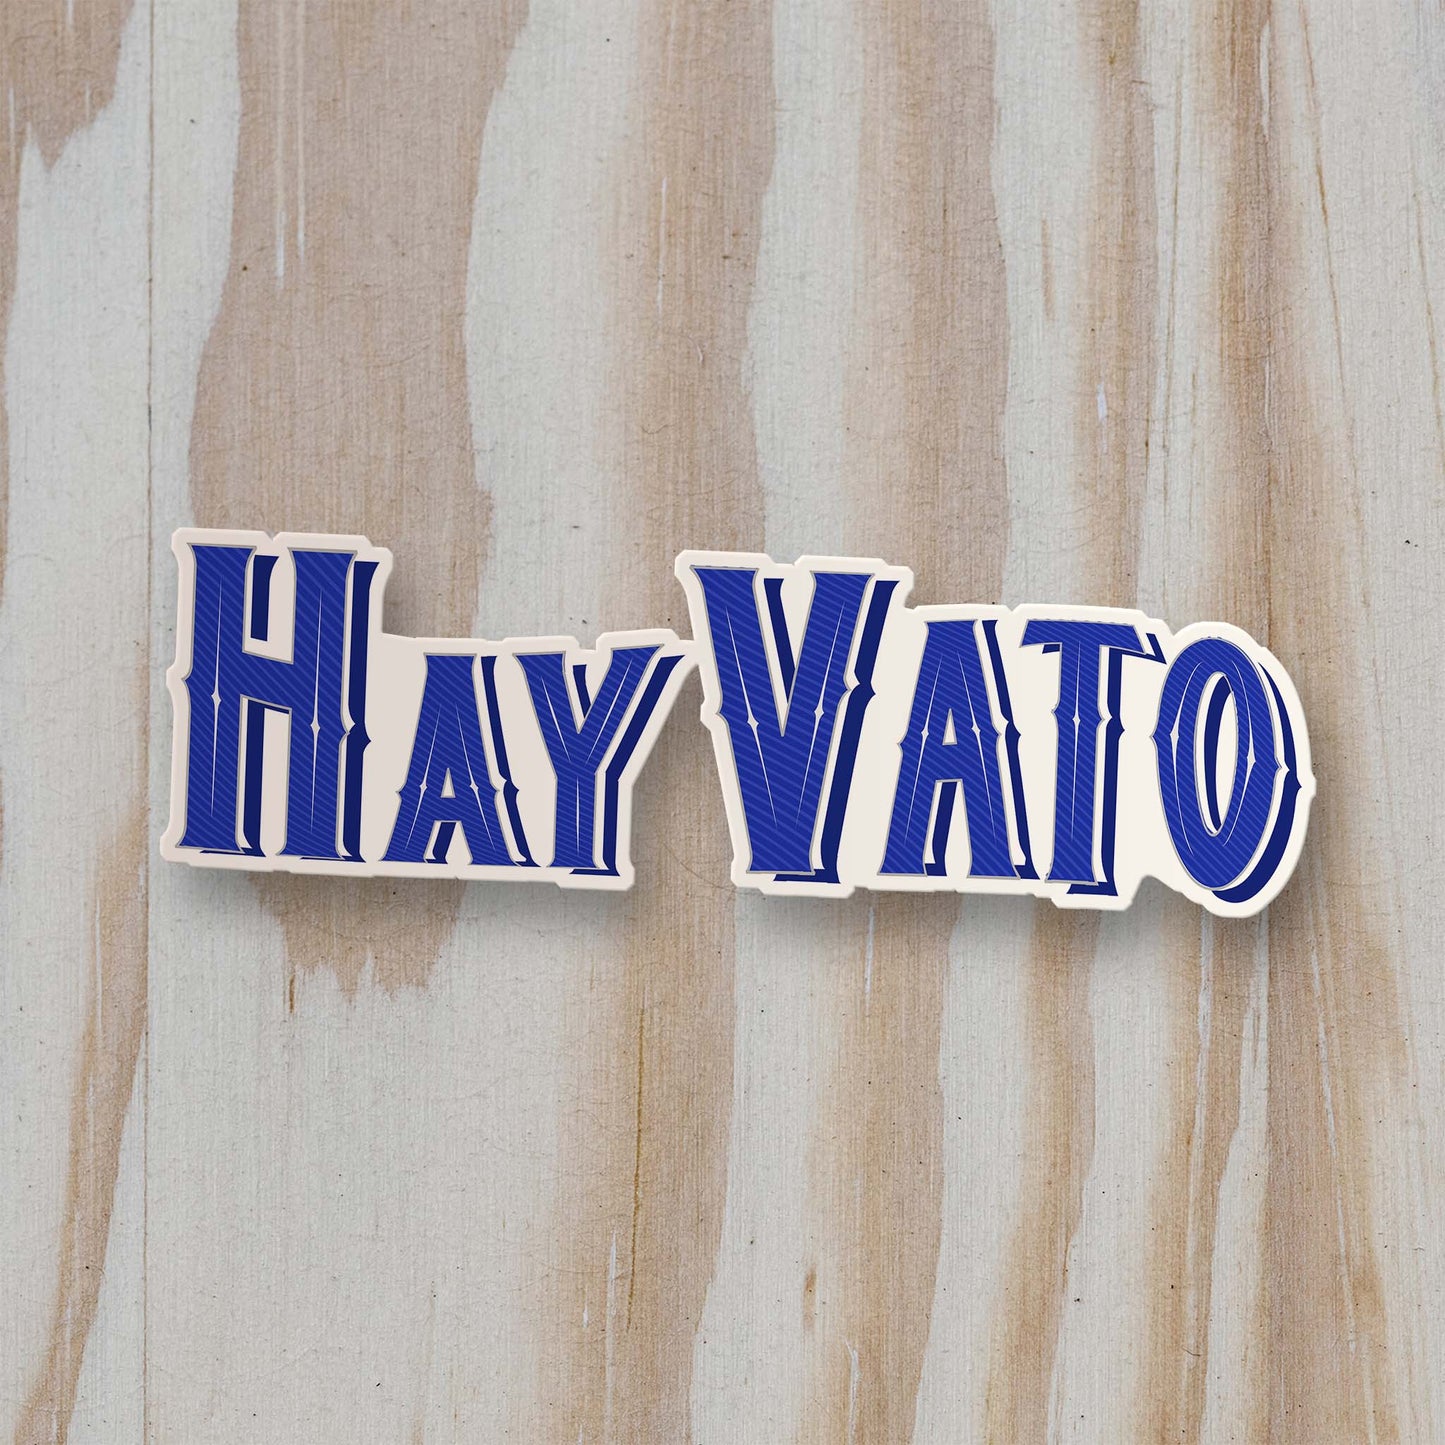 
                  
                    @hayvato Logo Sticker
                  
                